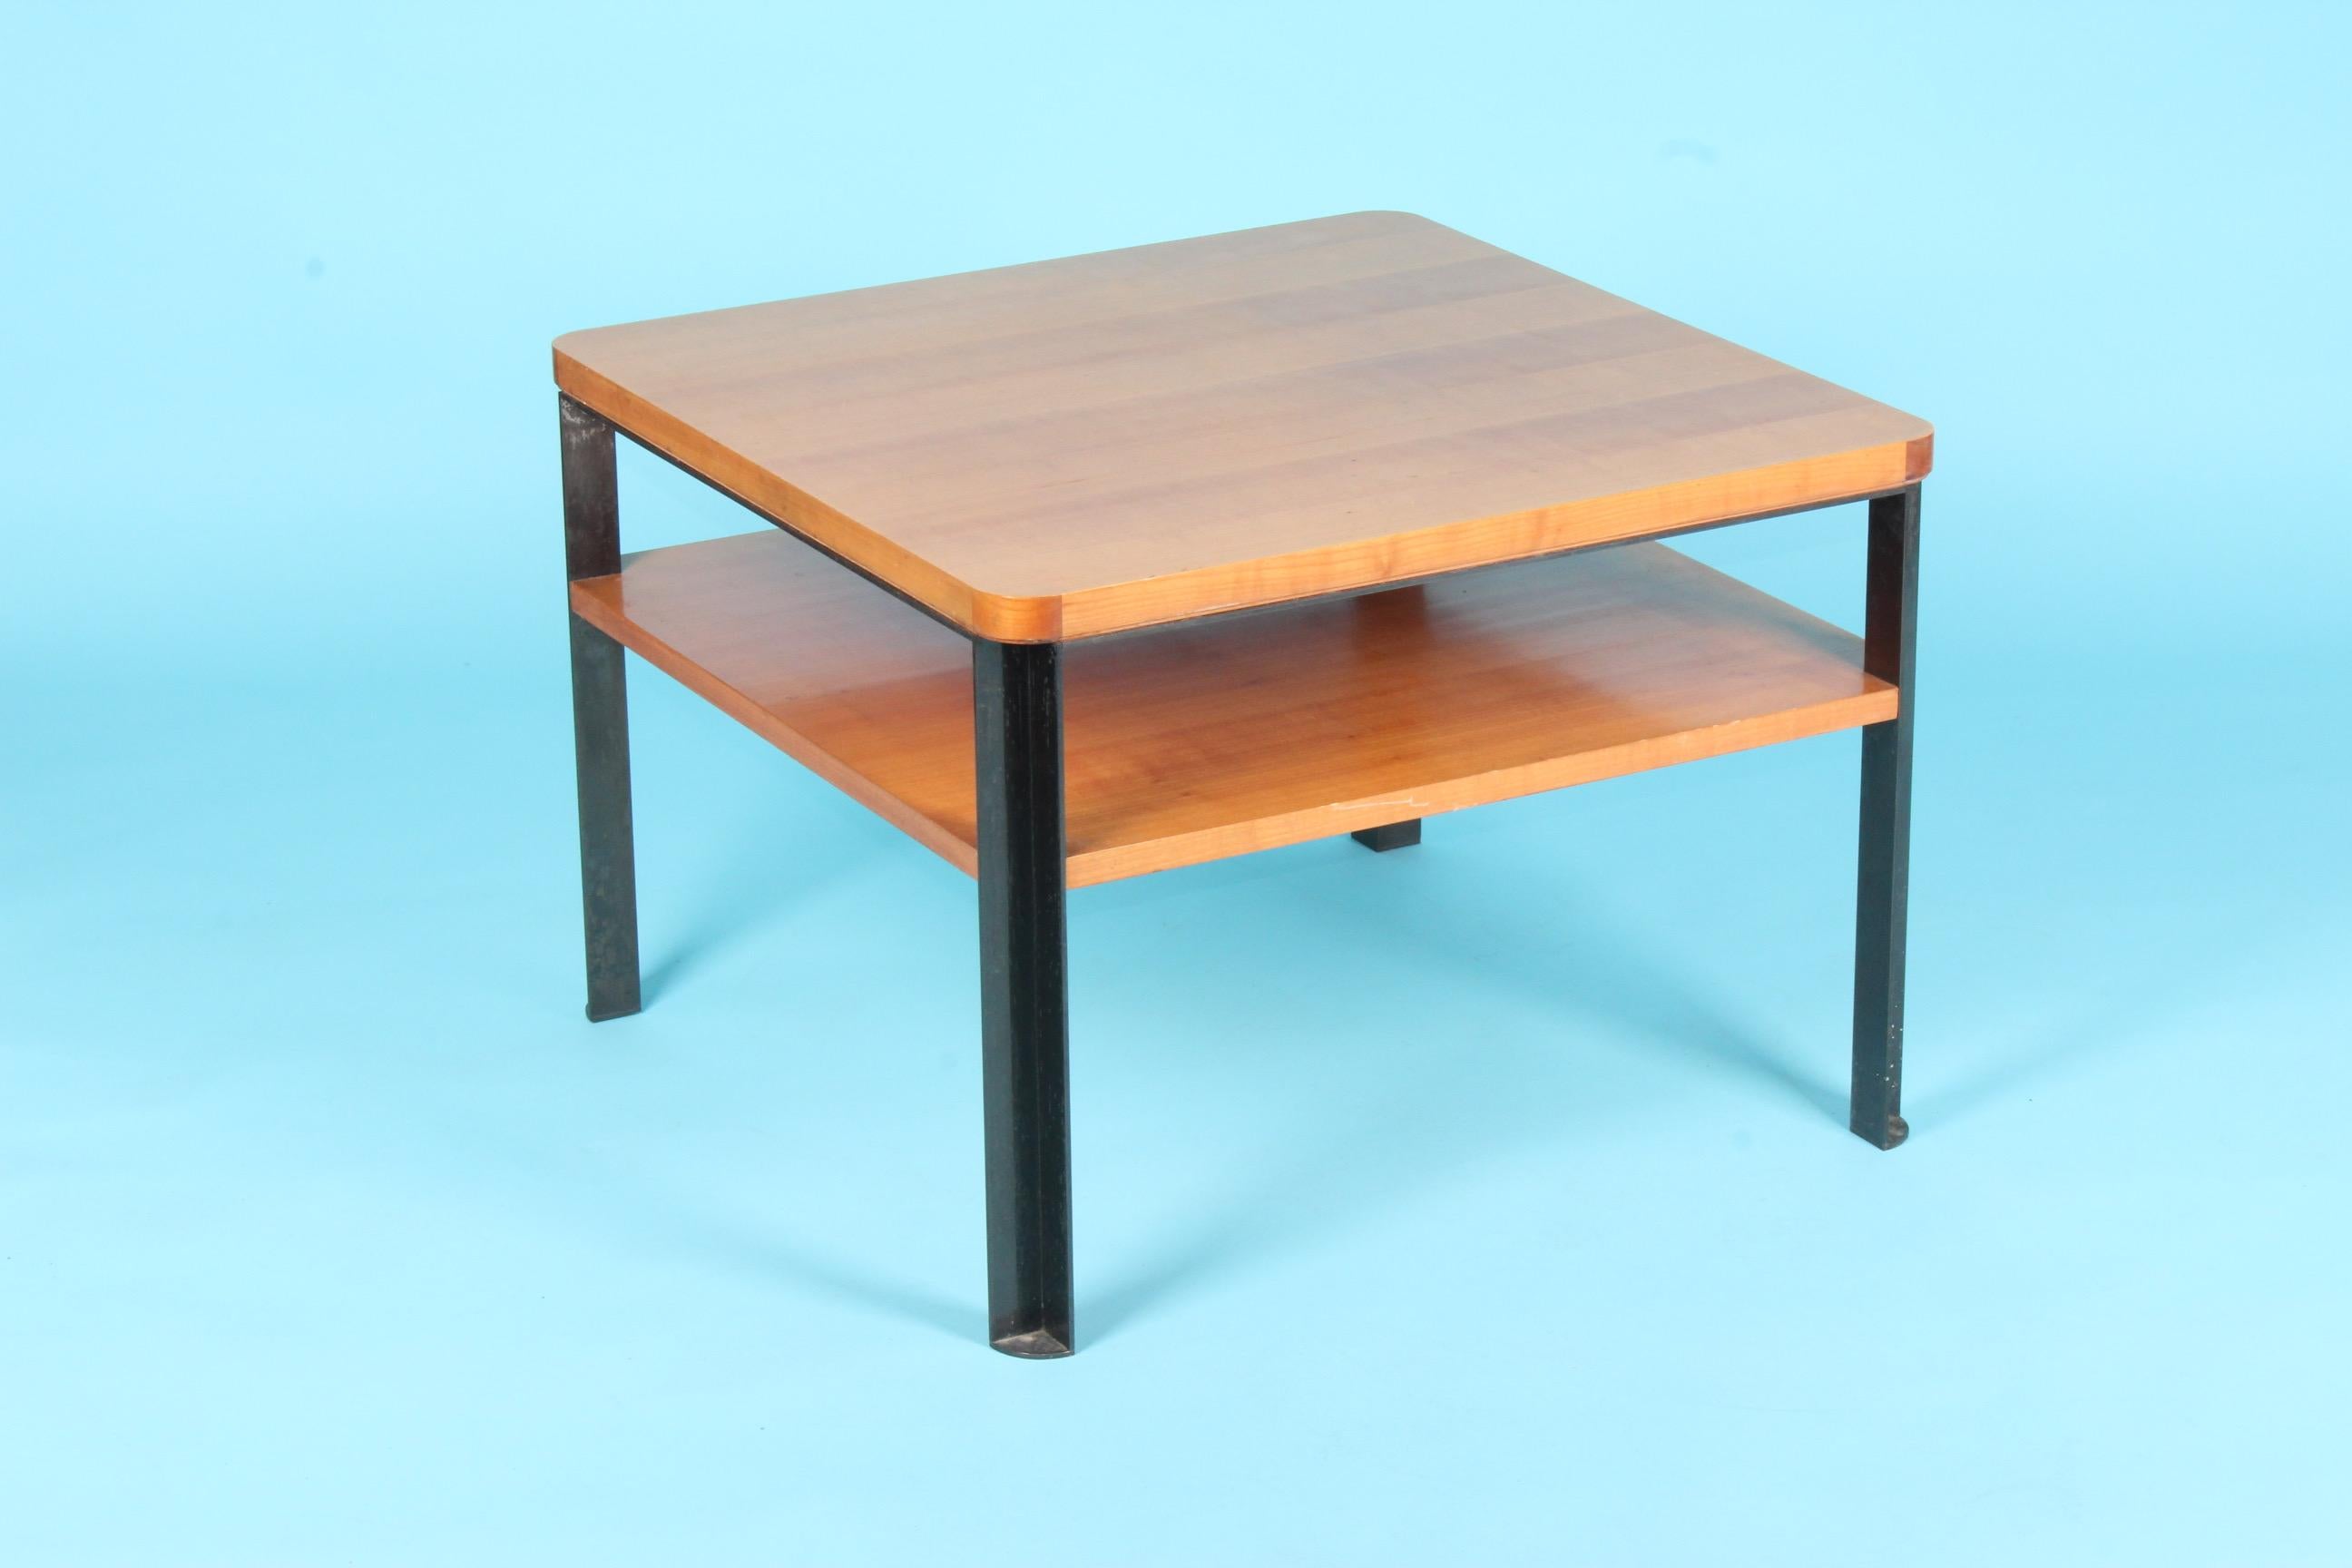 Metal and wood coffee table.